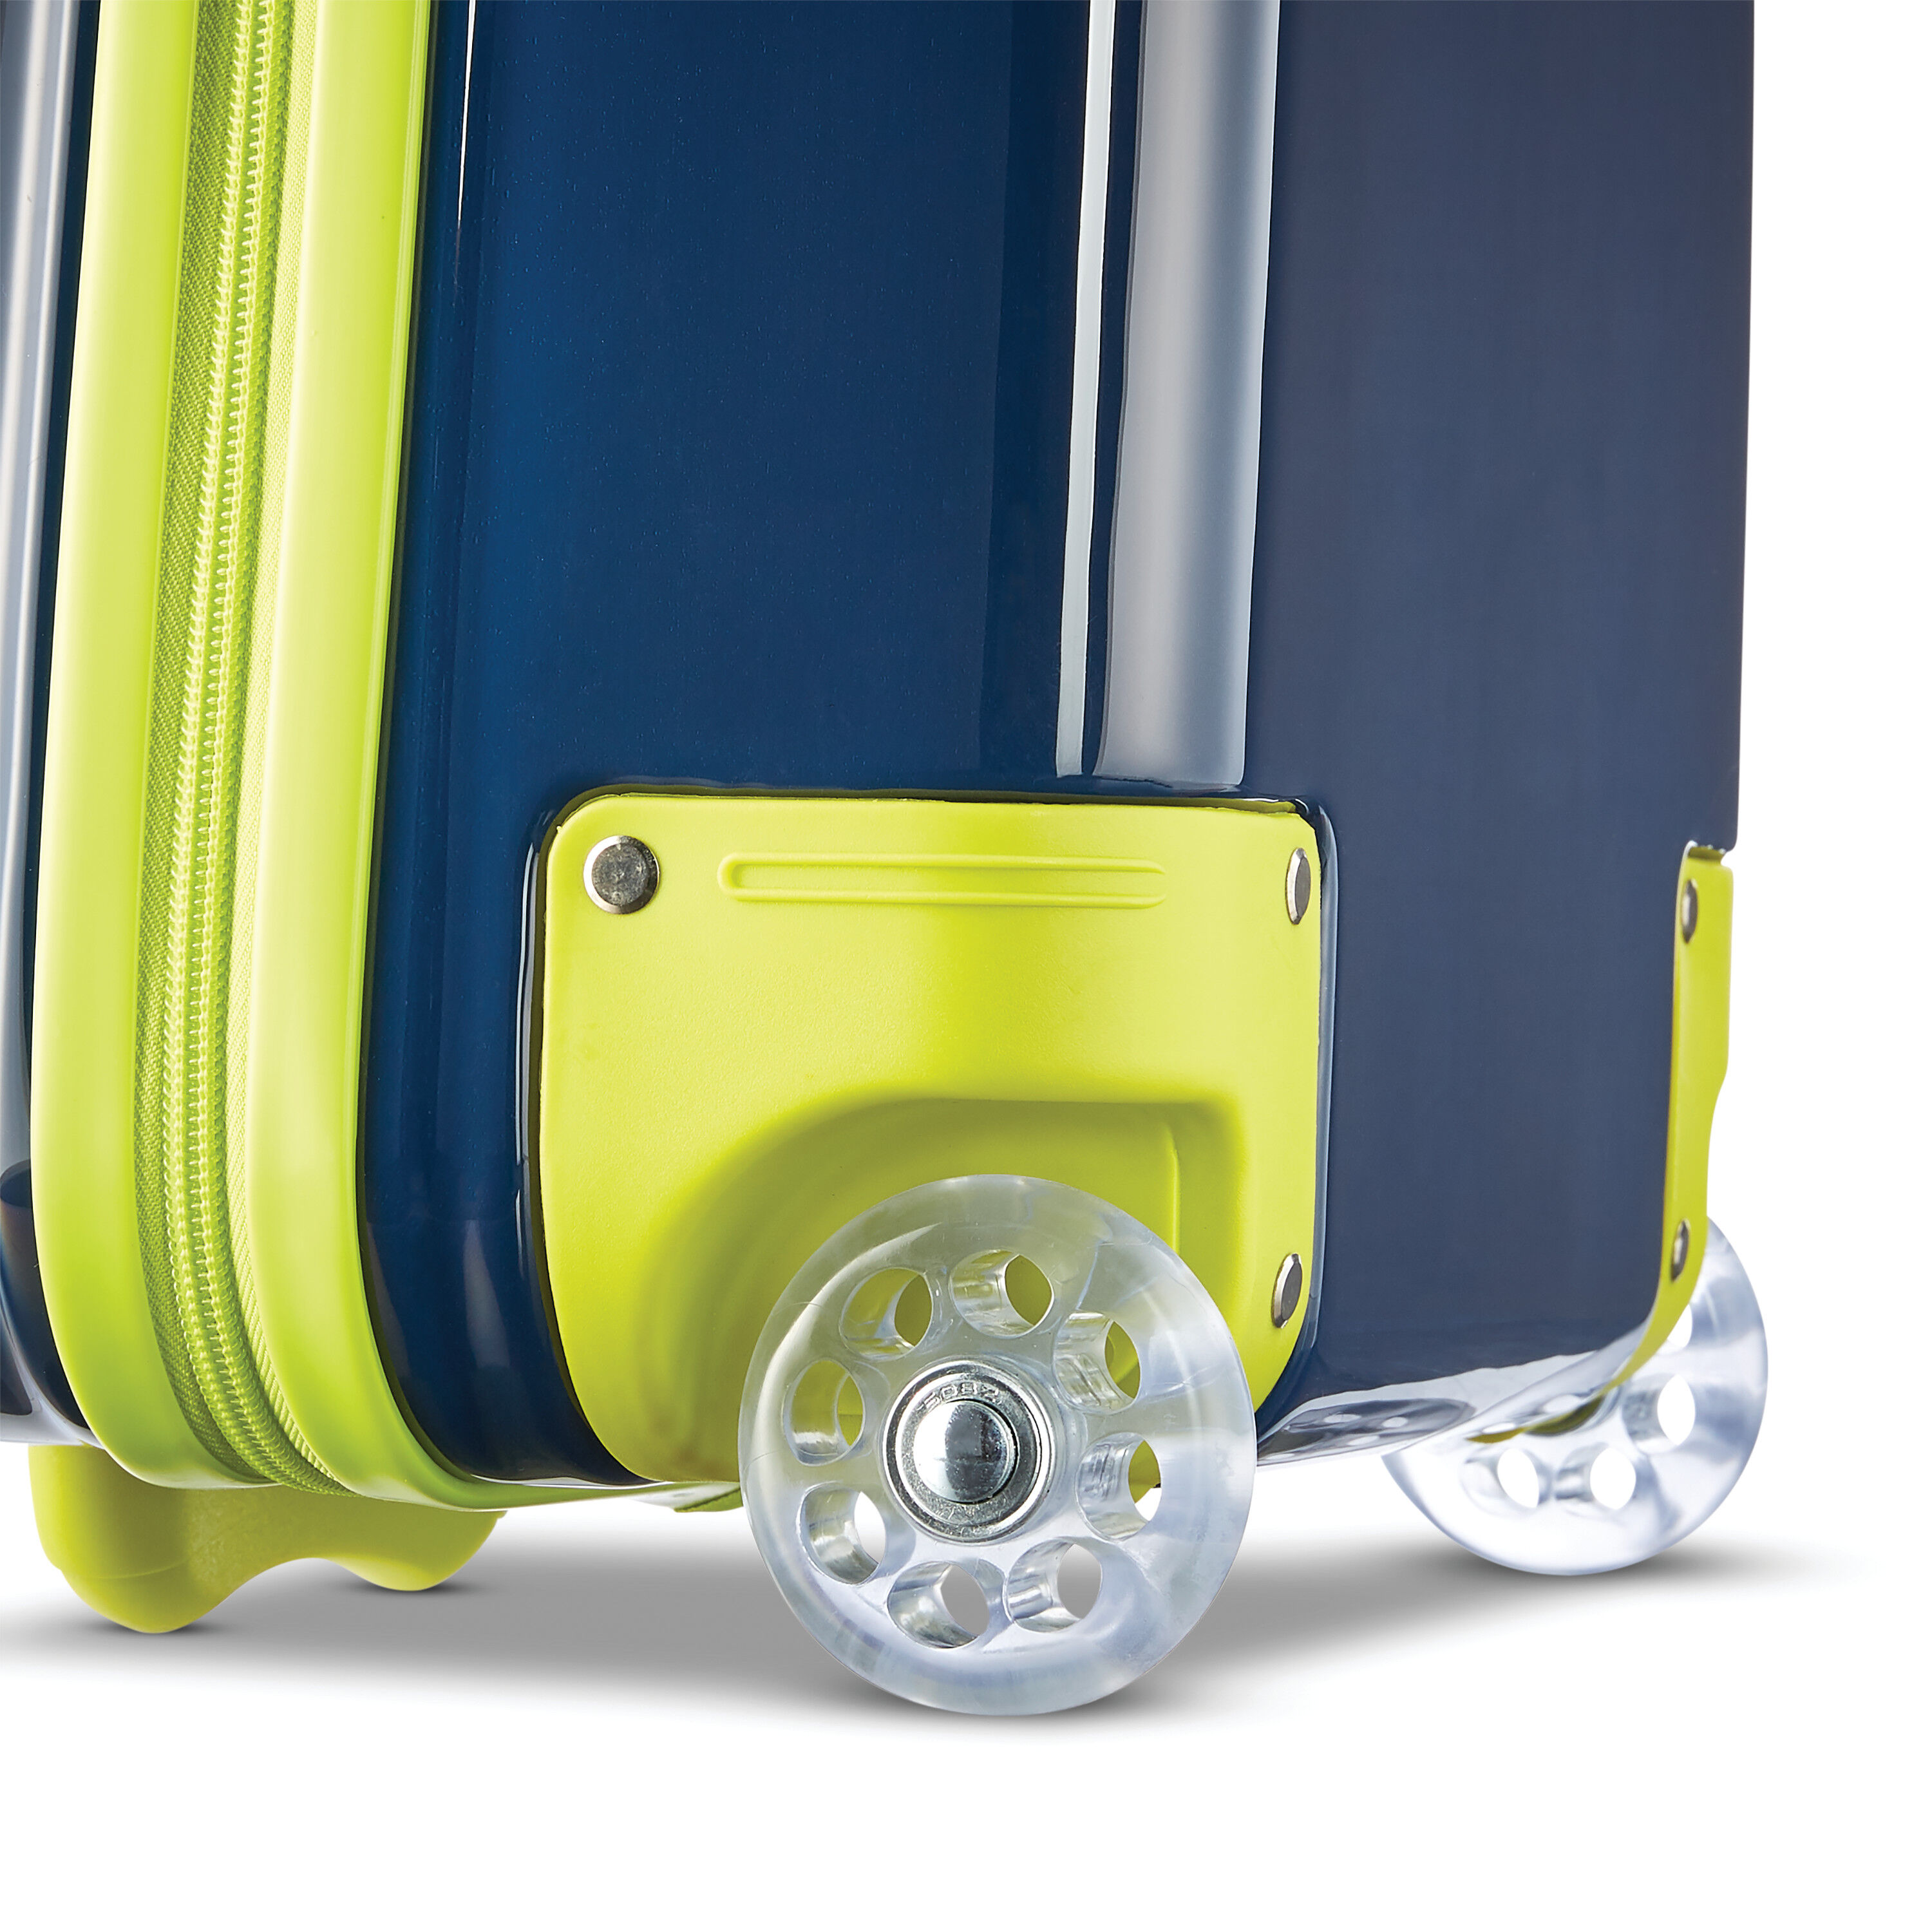 High Sierra® 2Pc Hardside Luggage Set